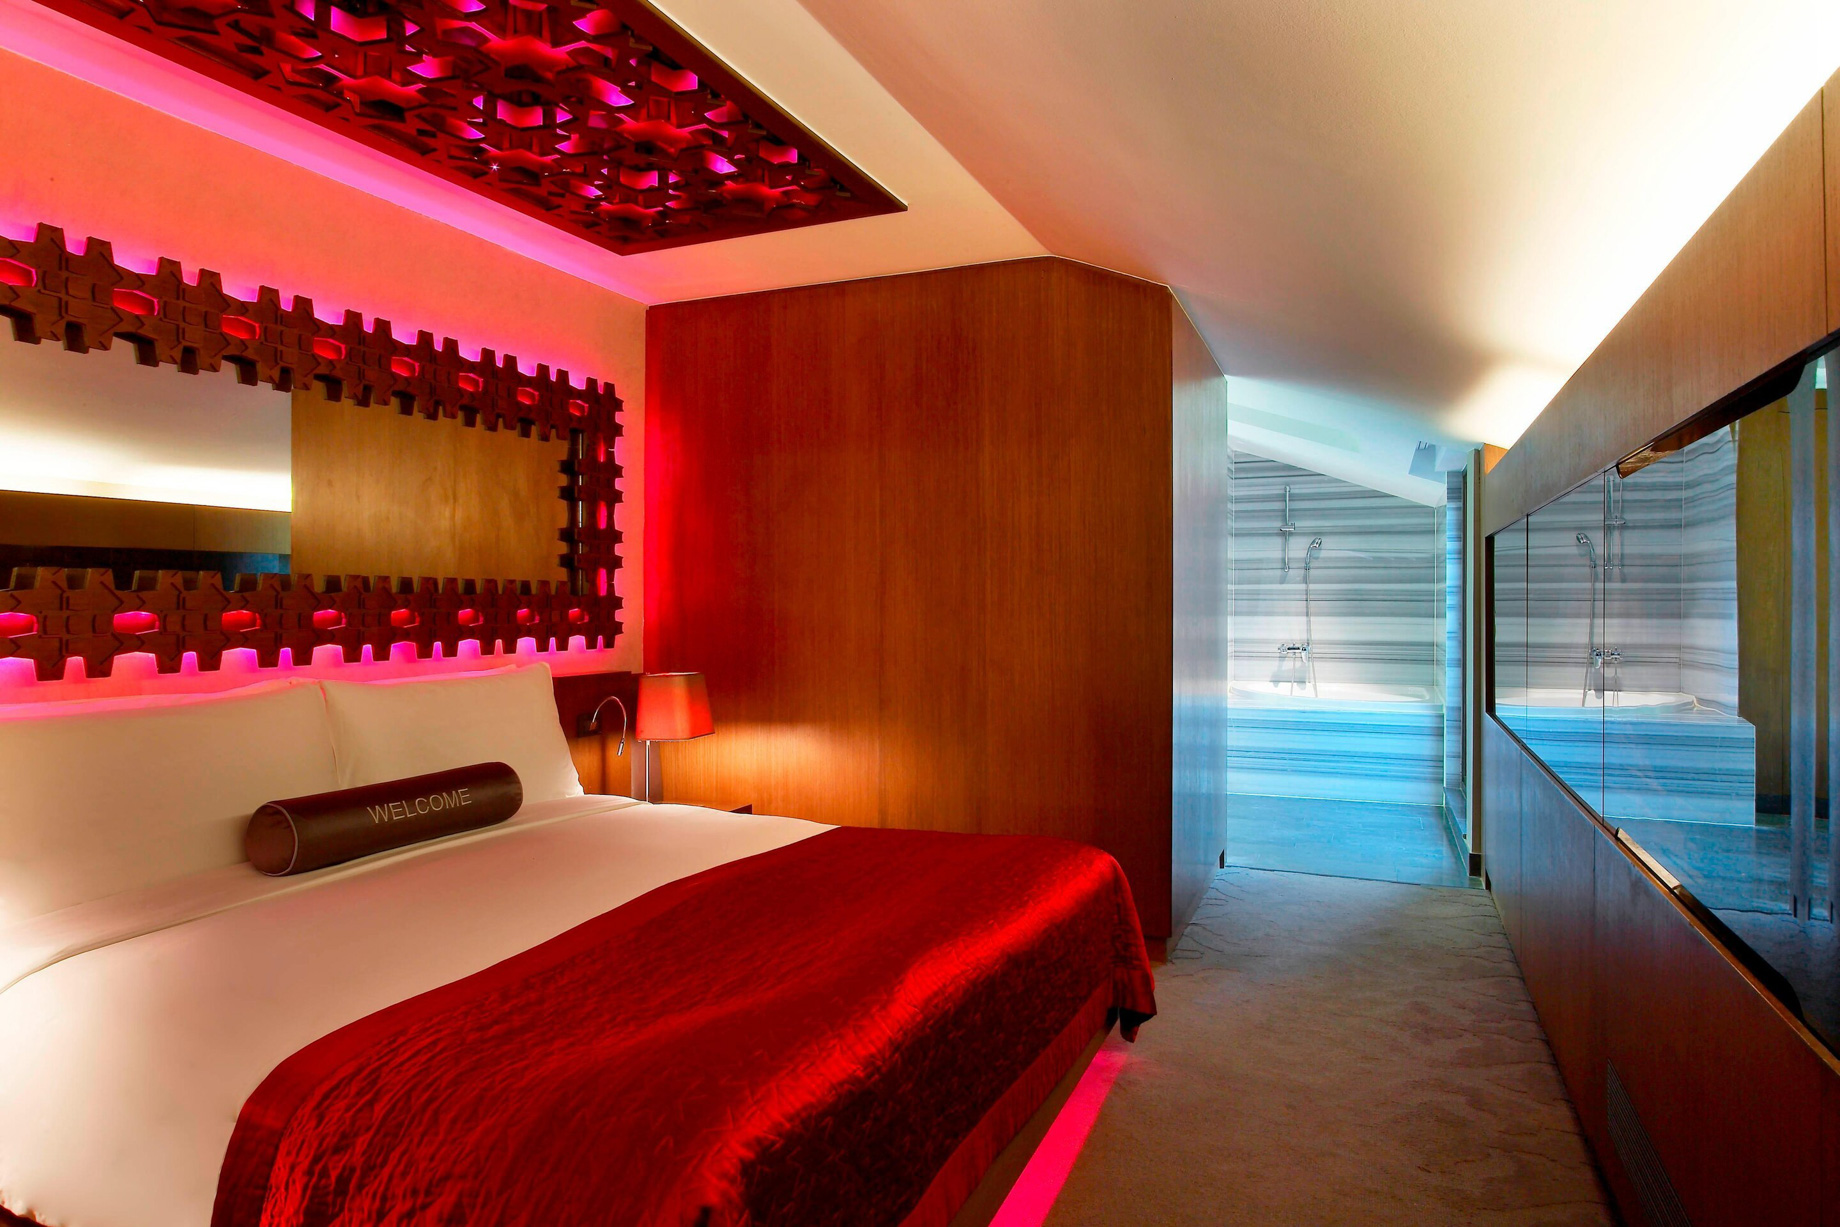 W Istanbul Hotel – Istanbul, Turkey – Marvelous Suite Decor